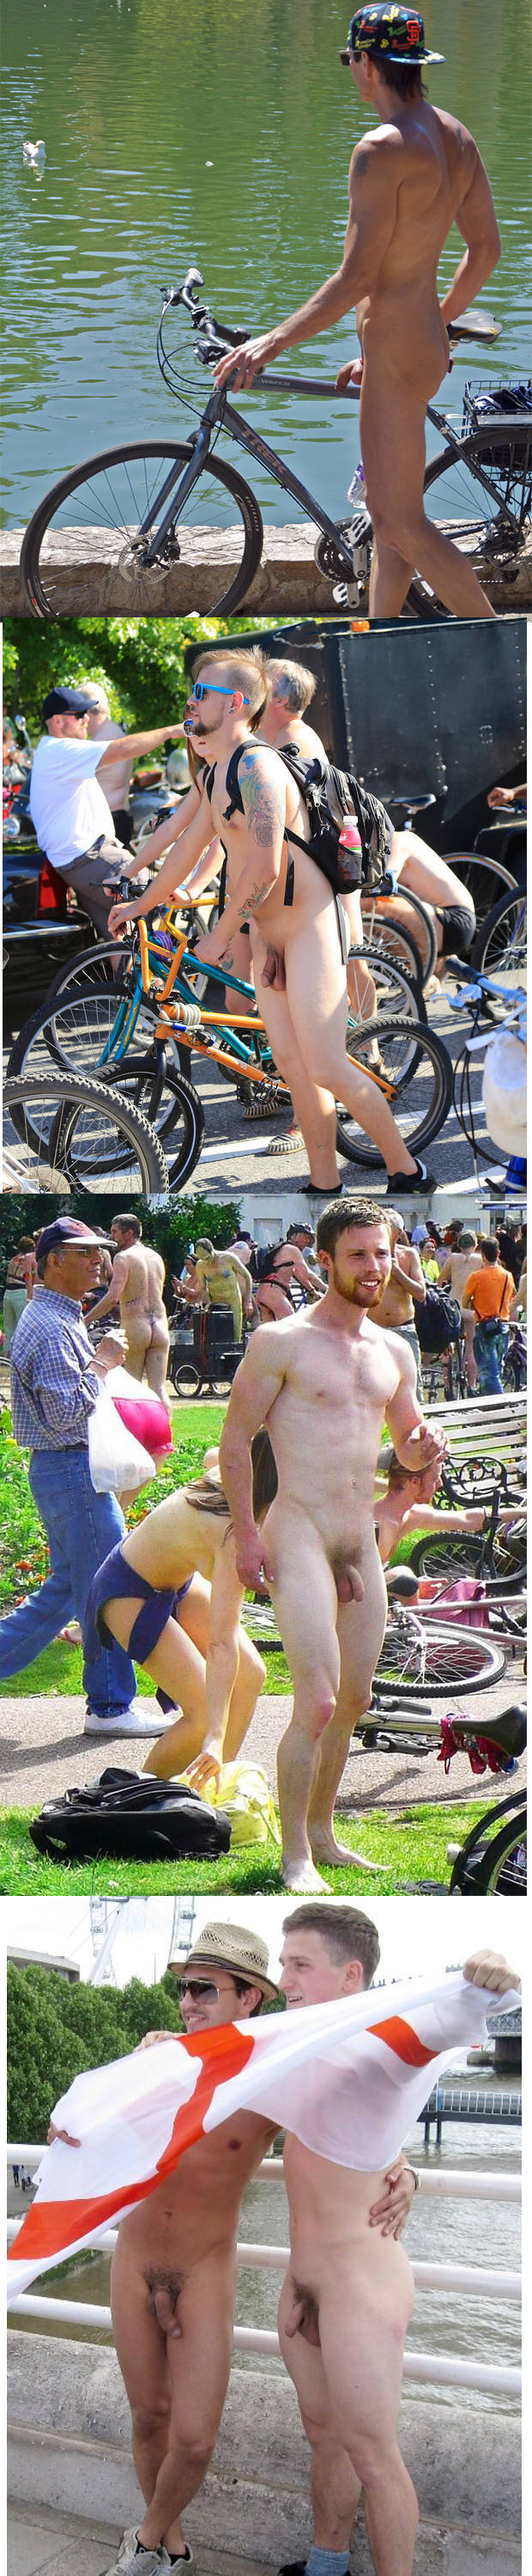 eric deman nude guys bike ride